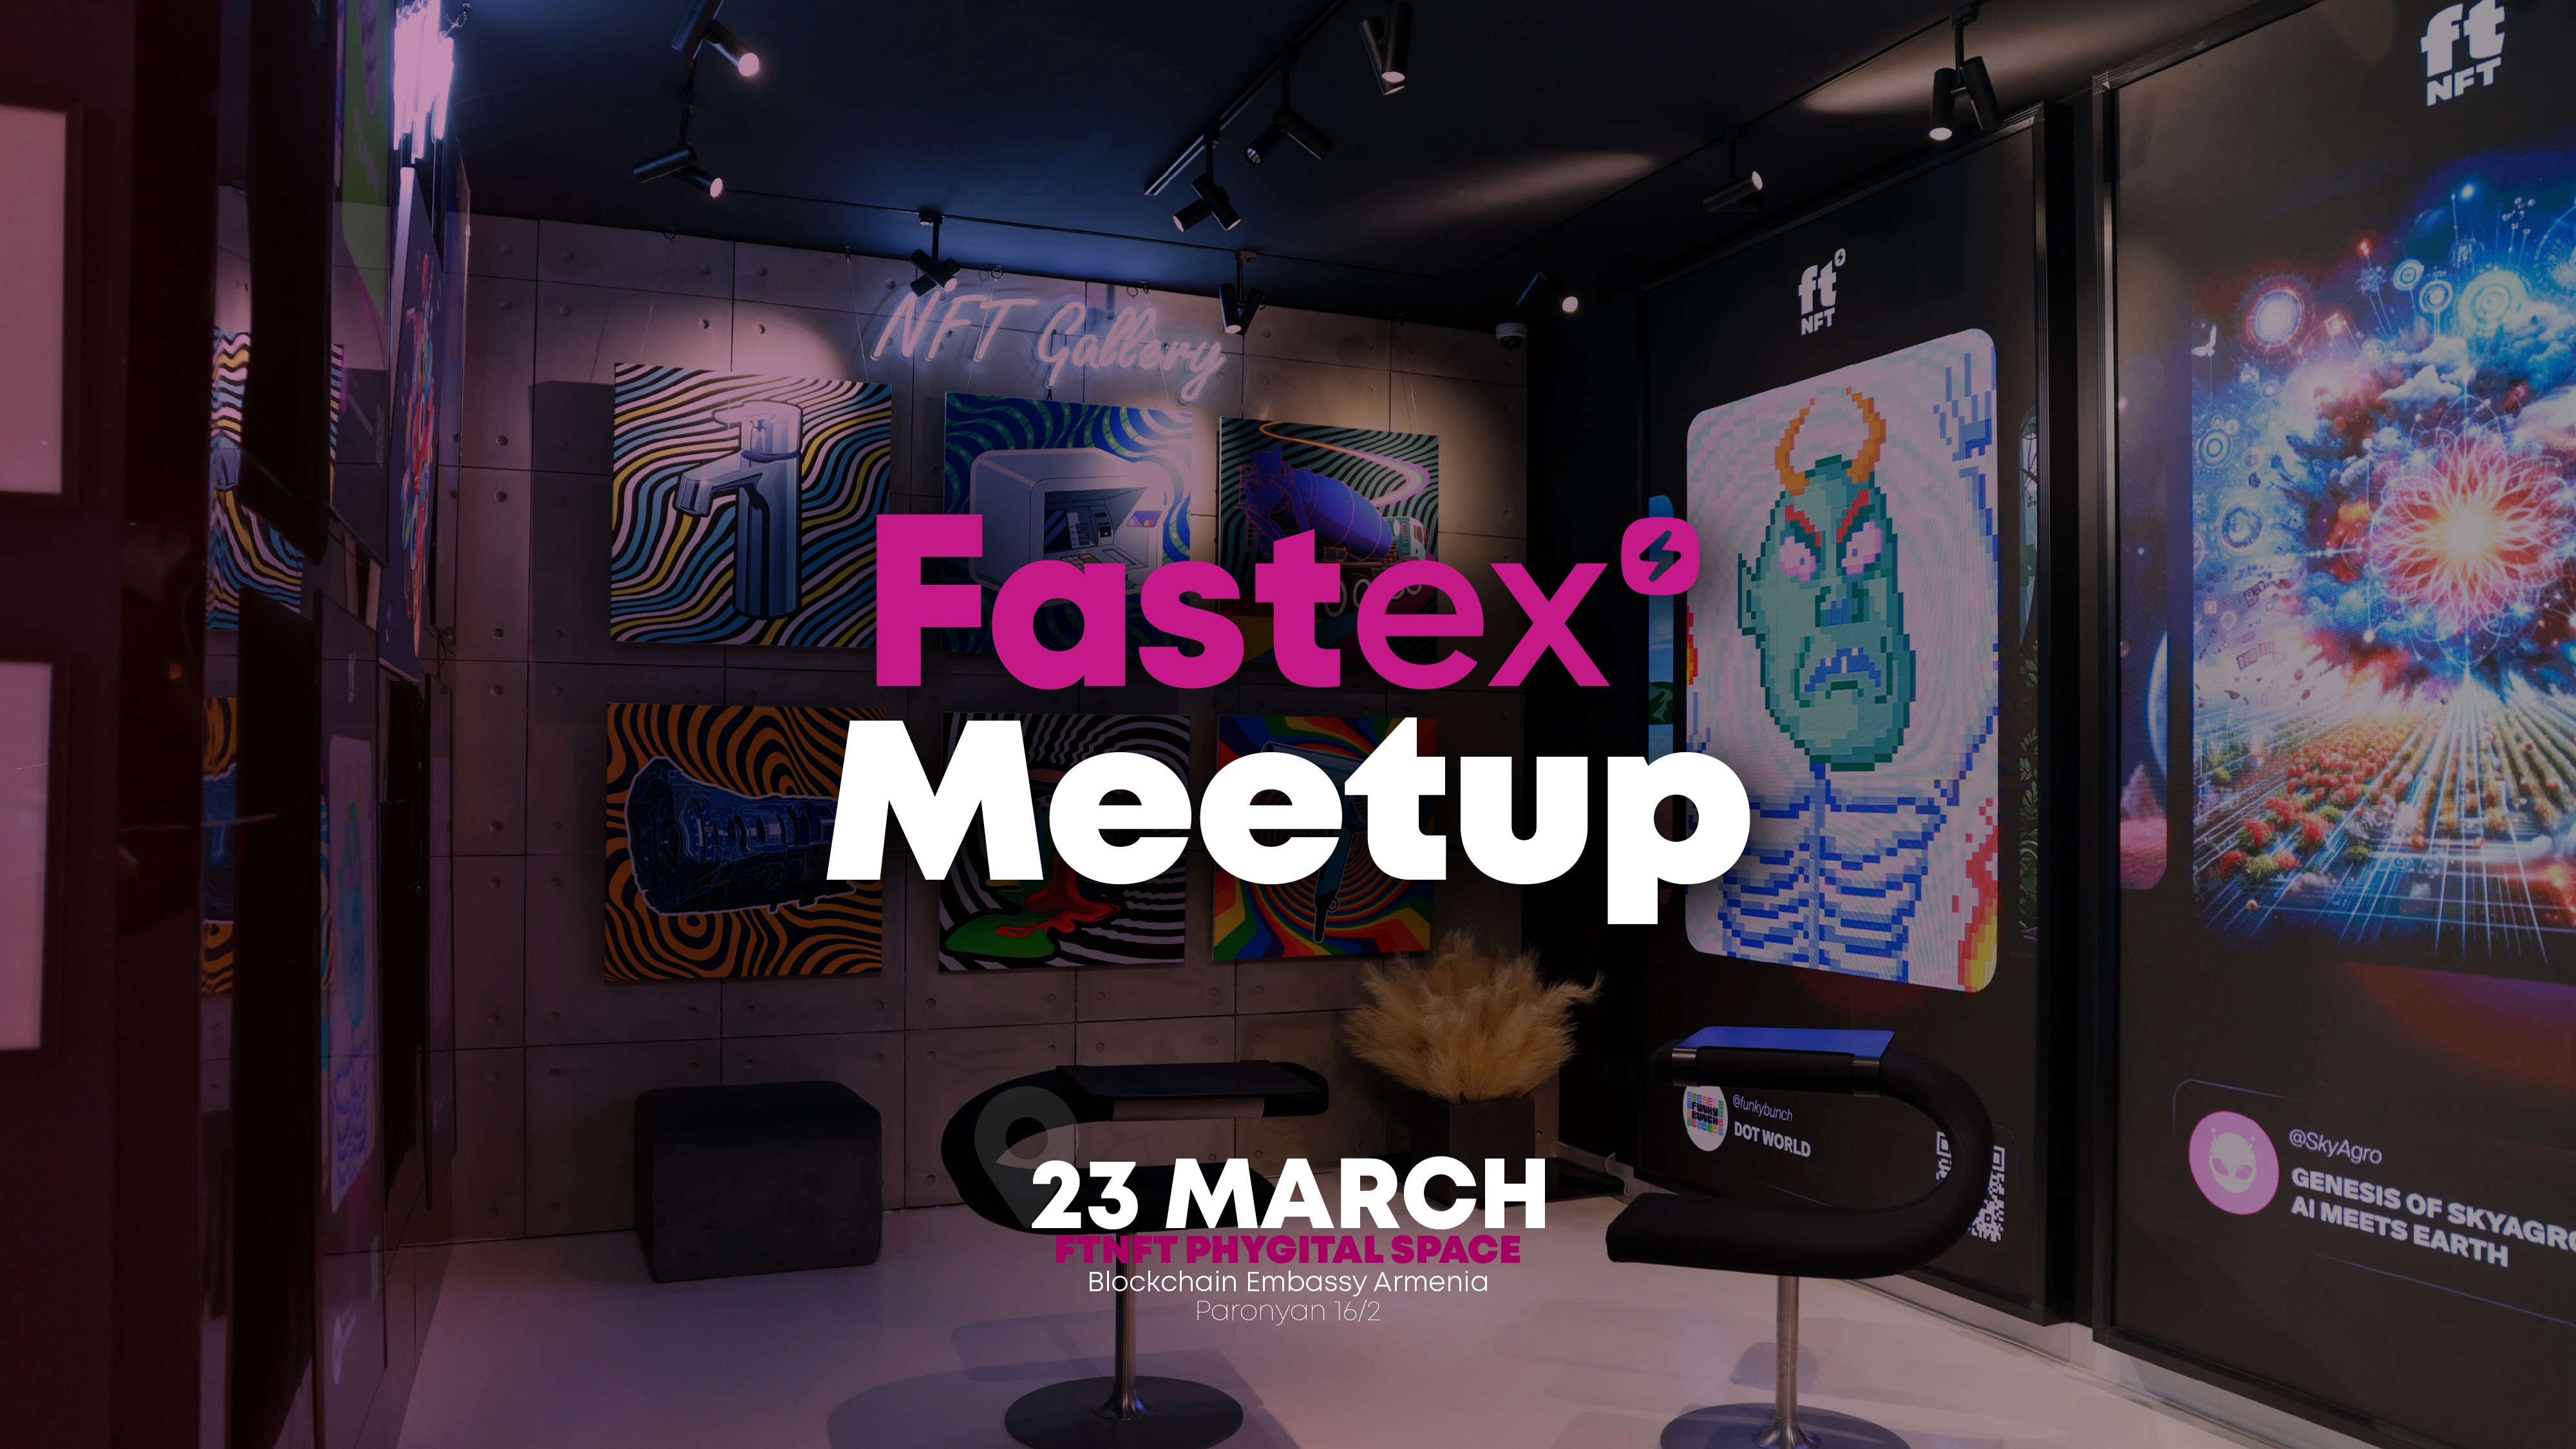 Fastex организовал Meetup - встречу на территории Blockchain Embassy of Armenia , темой которой были  Web3 технологии.